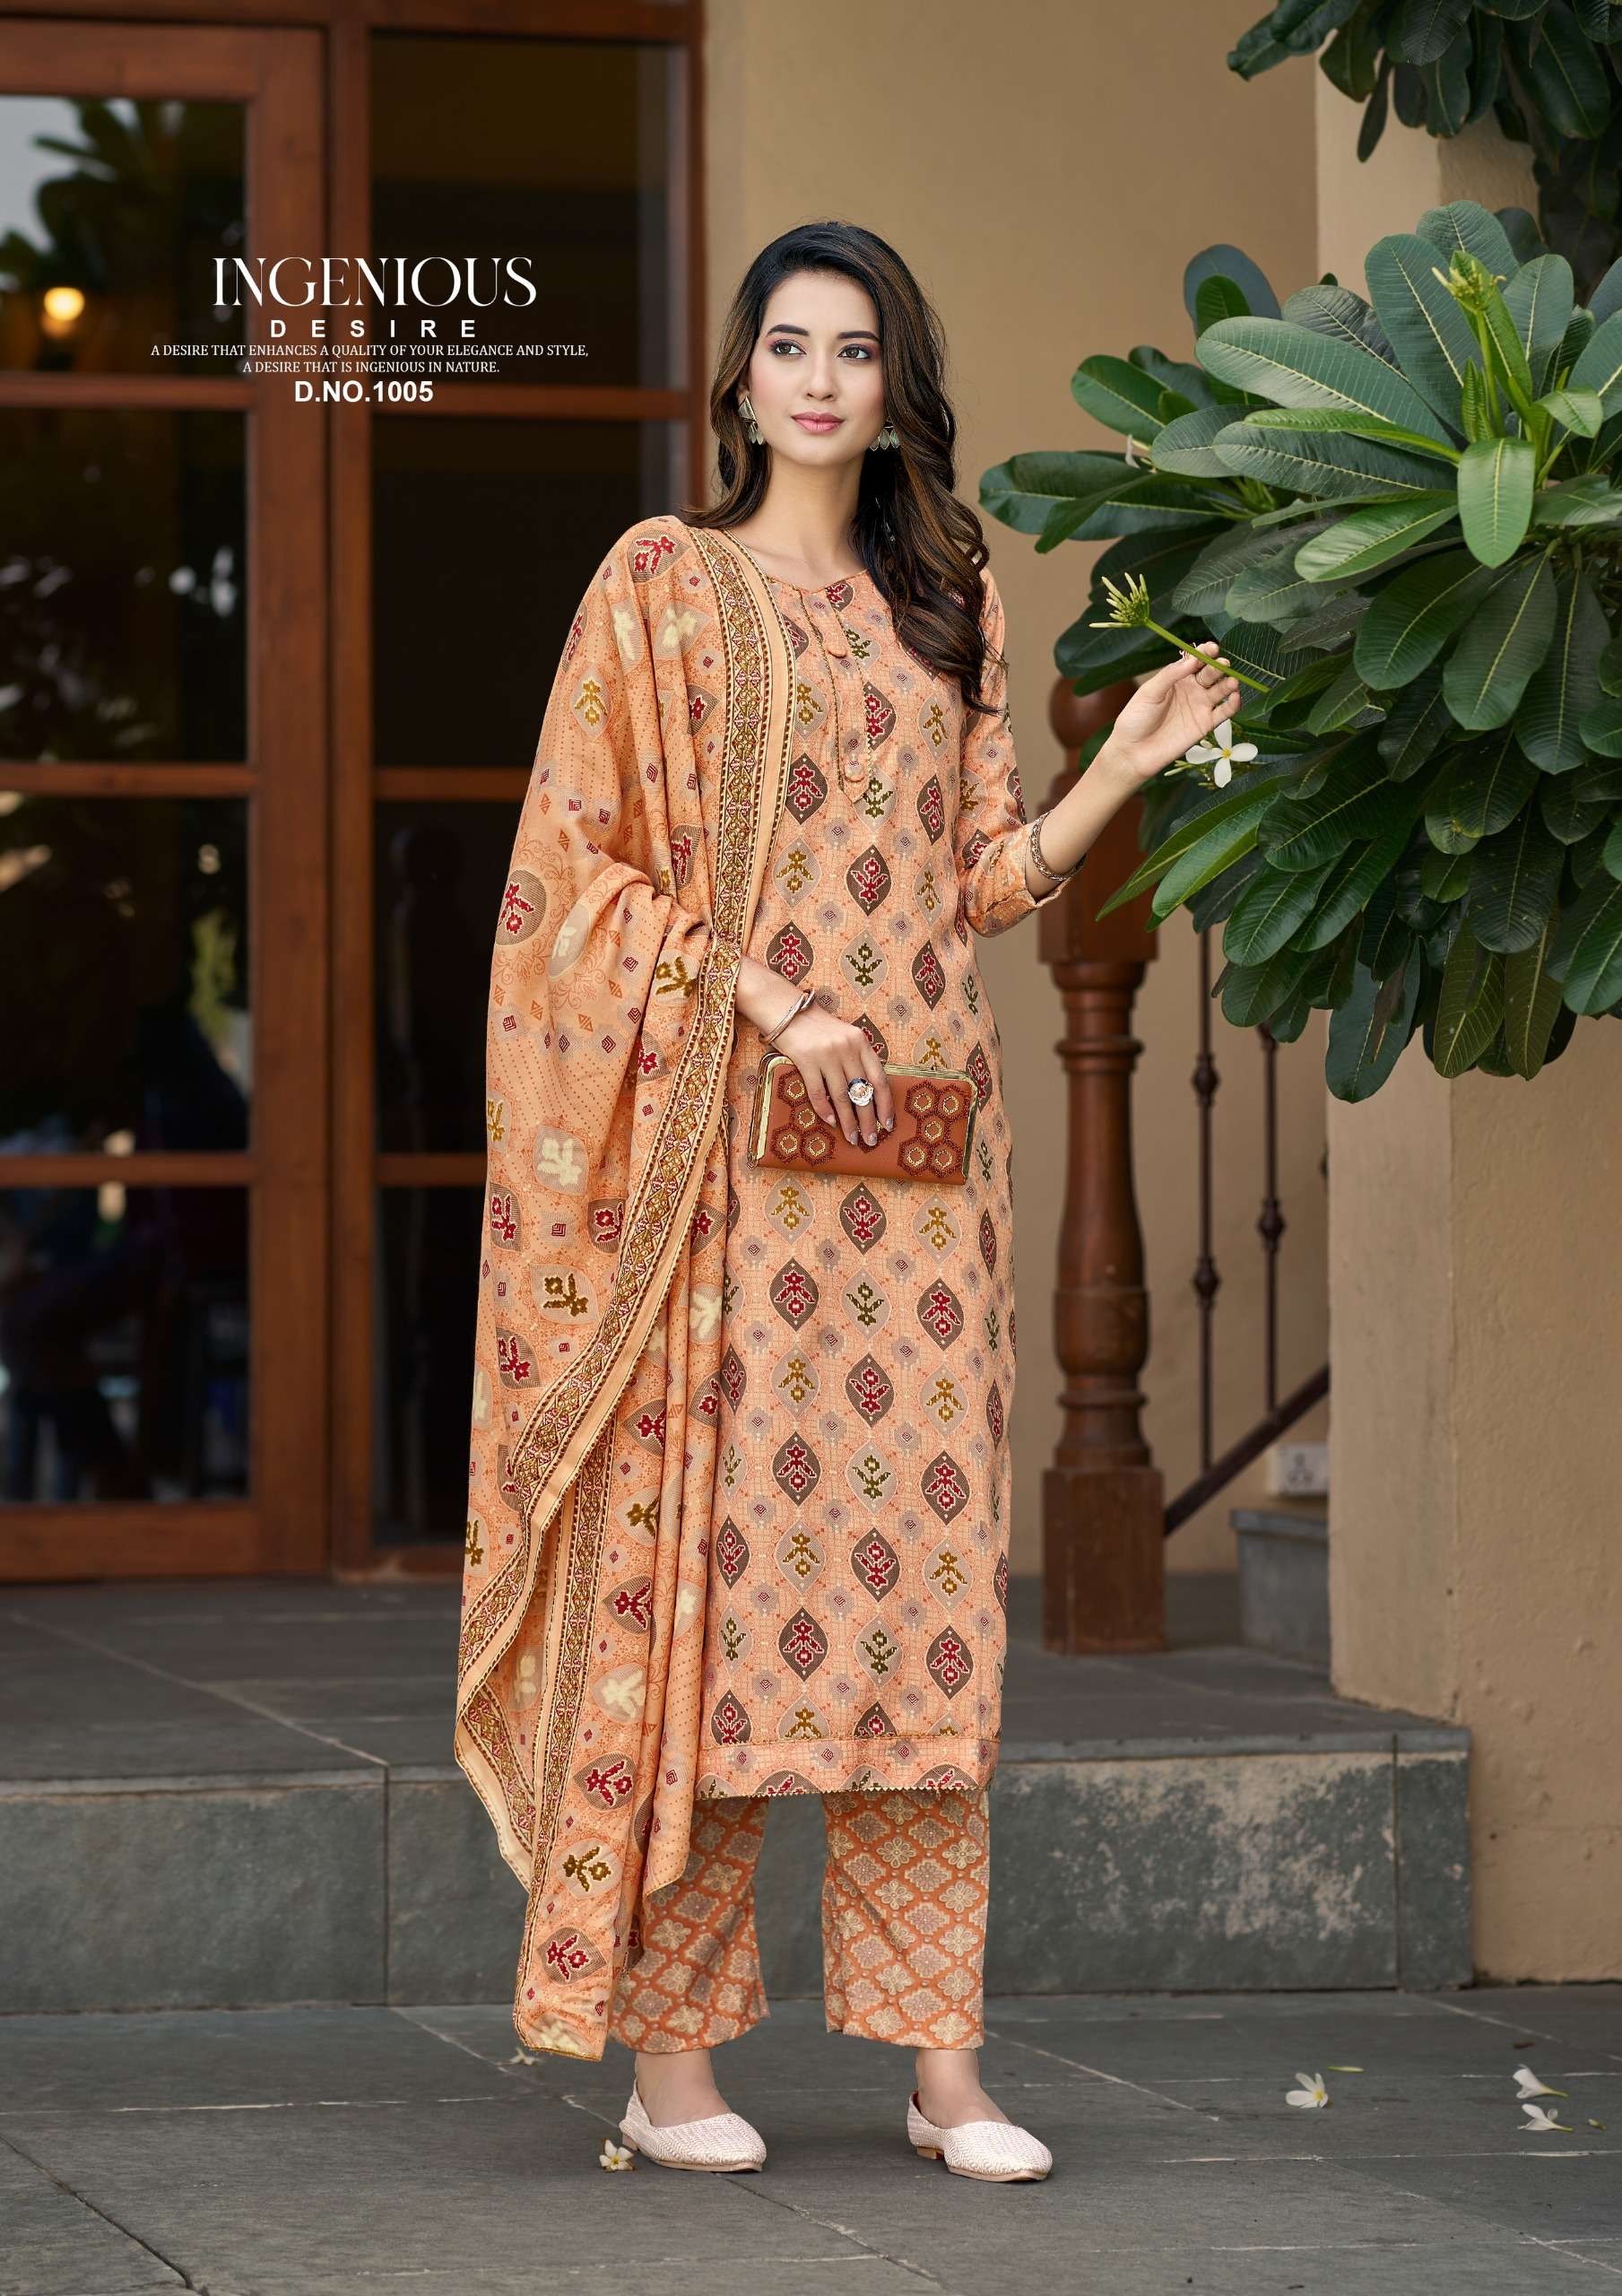 rolimoli creation jasmine 1001-1008 series latest printed pasmina pakistani salwar kameez wholesaler surat gujarat